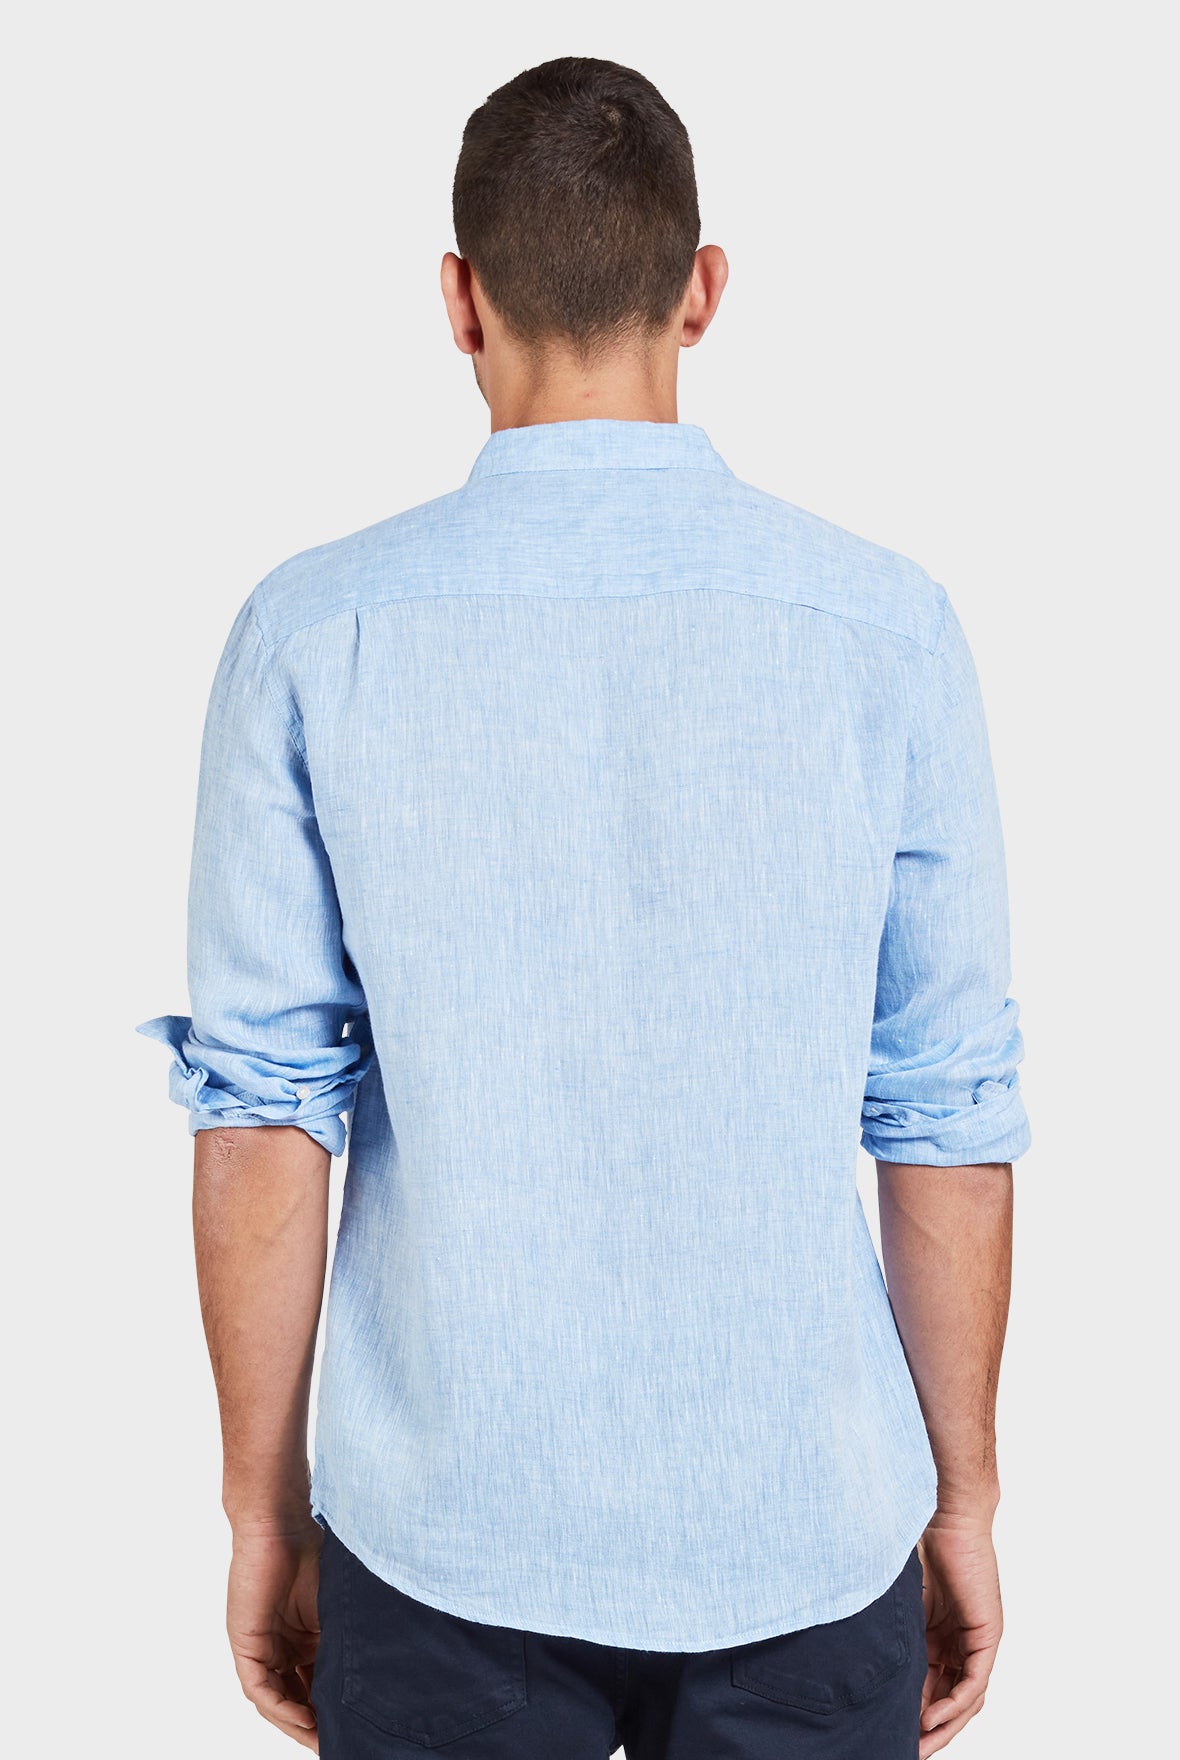 Hampton Linen Shirt in Chambray | Academy Brand